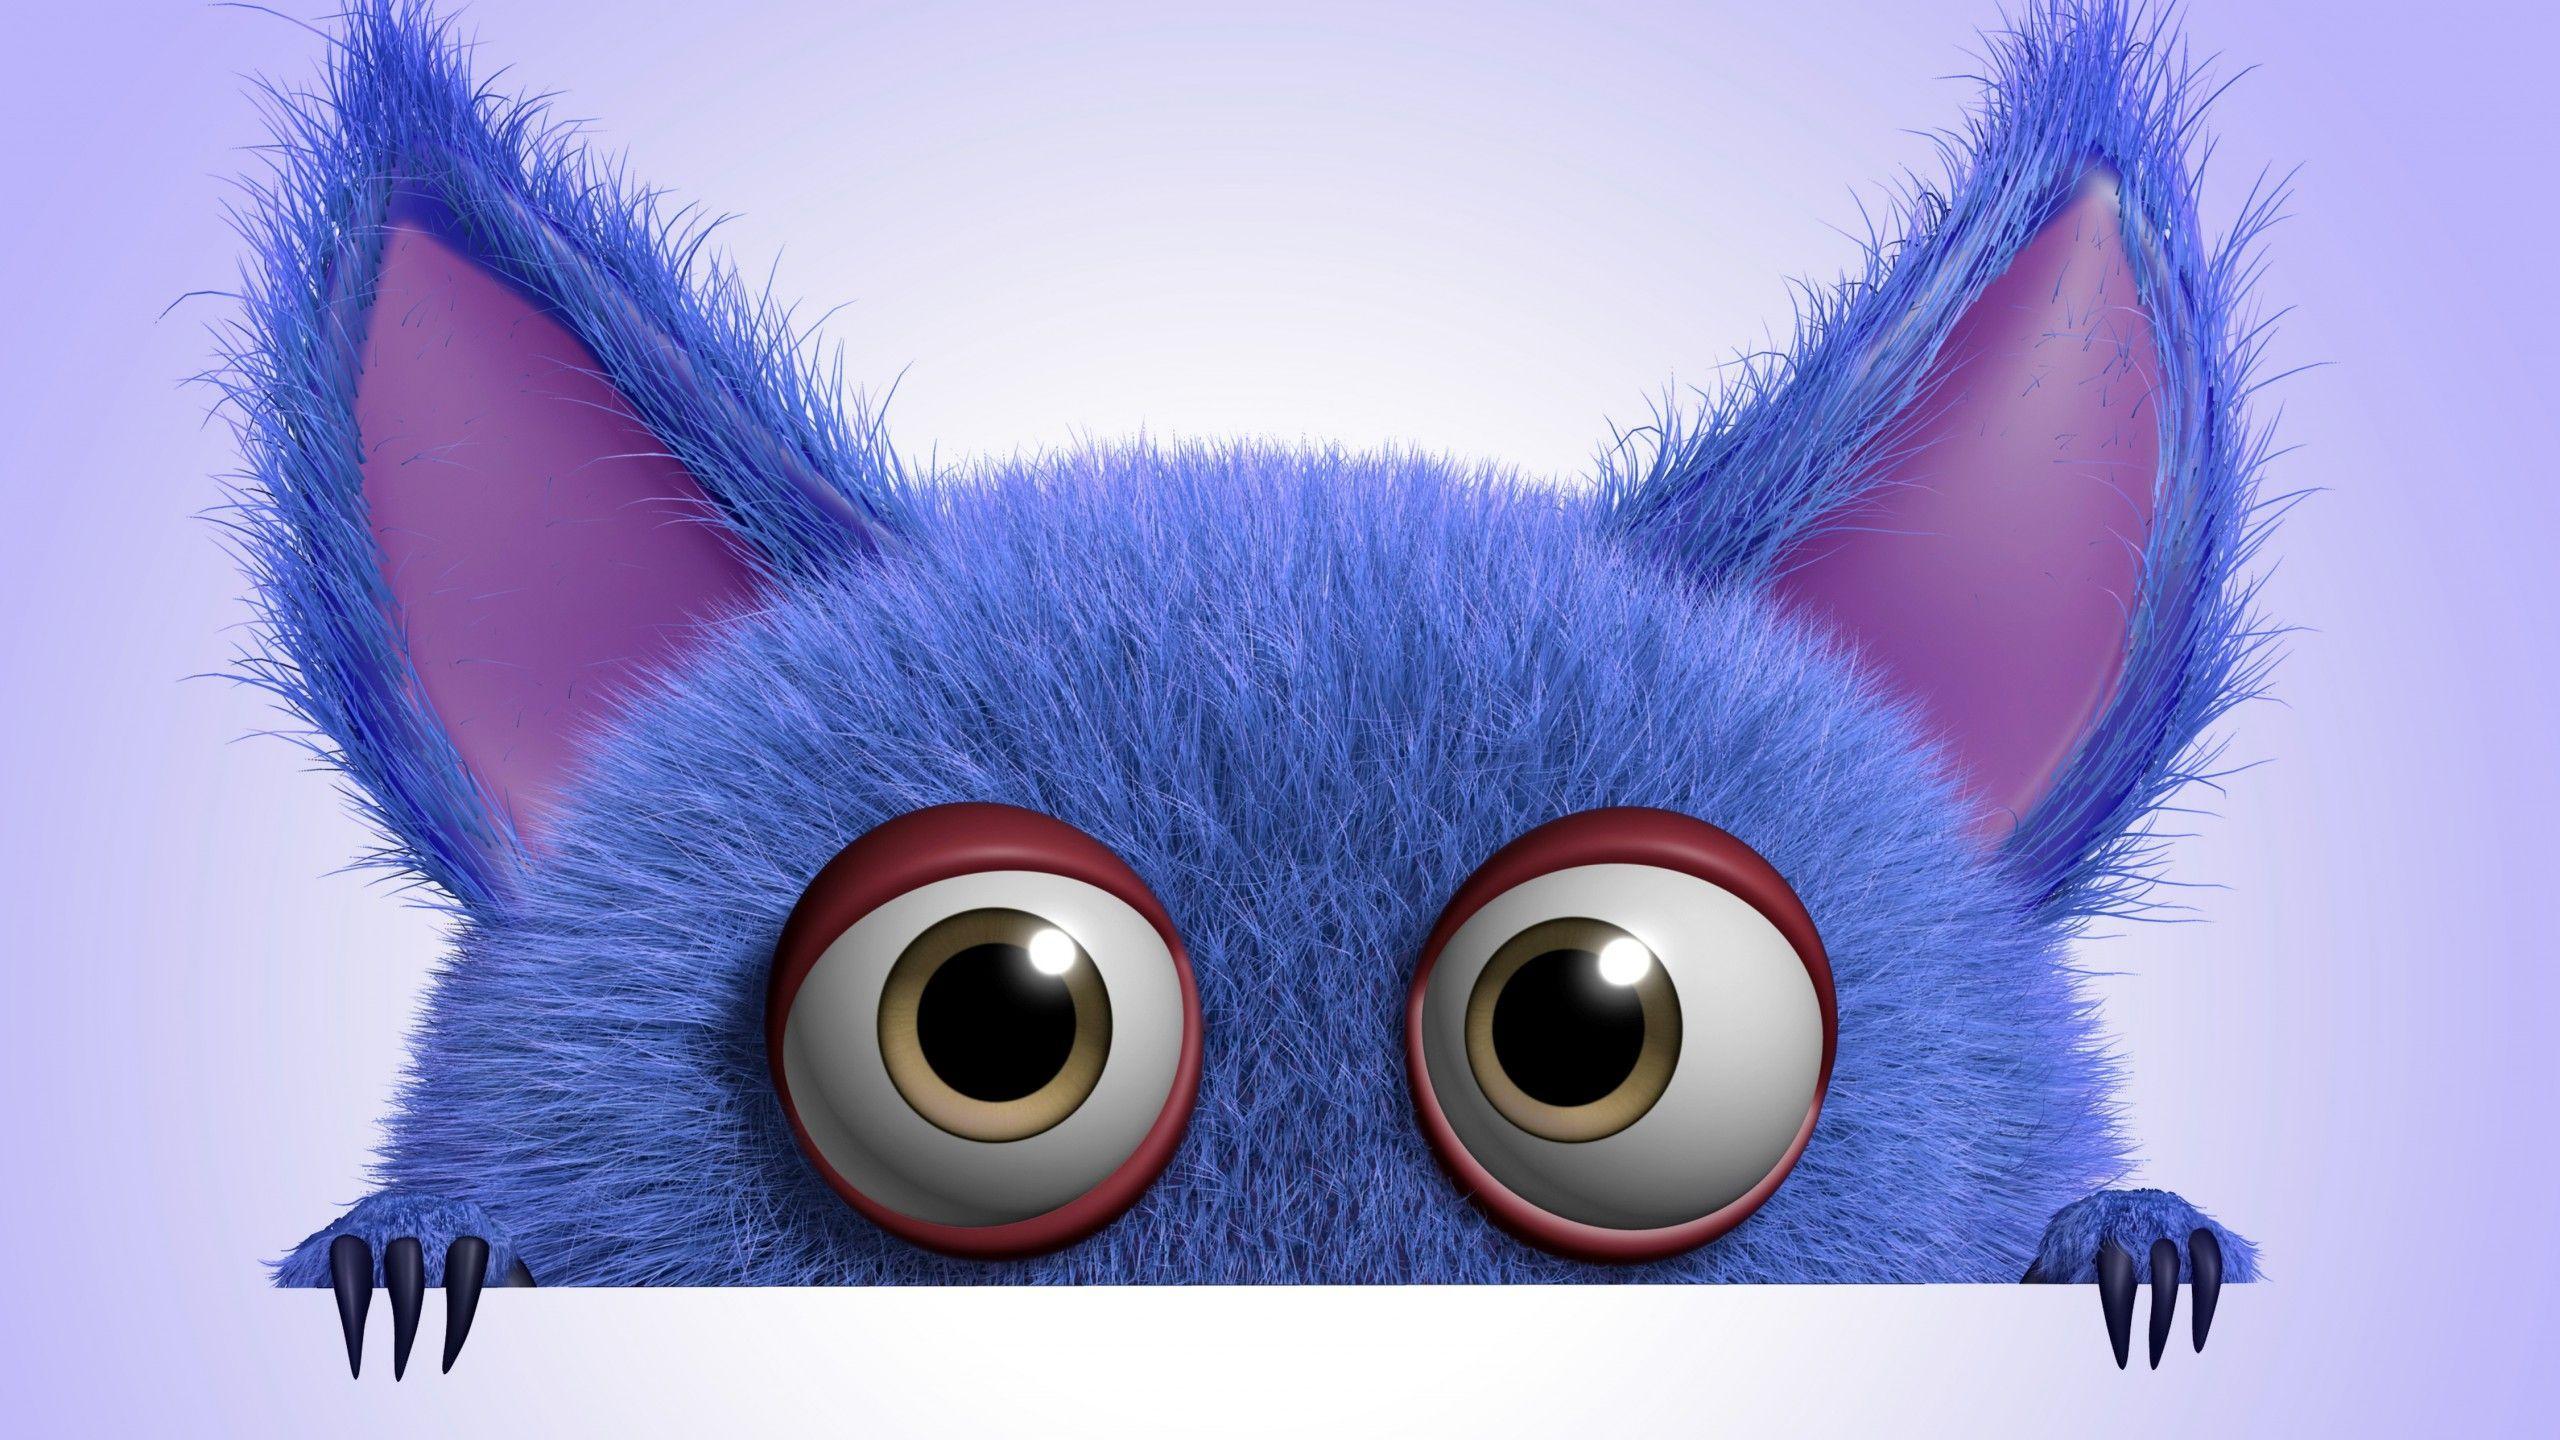 Download wallpaper 3D, funny, monster, cartoon, cute, fluffy